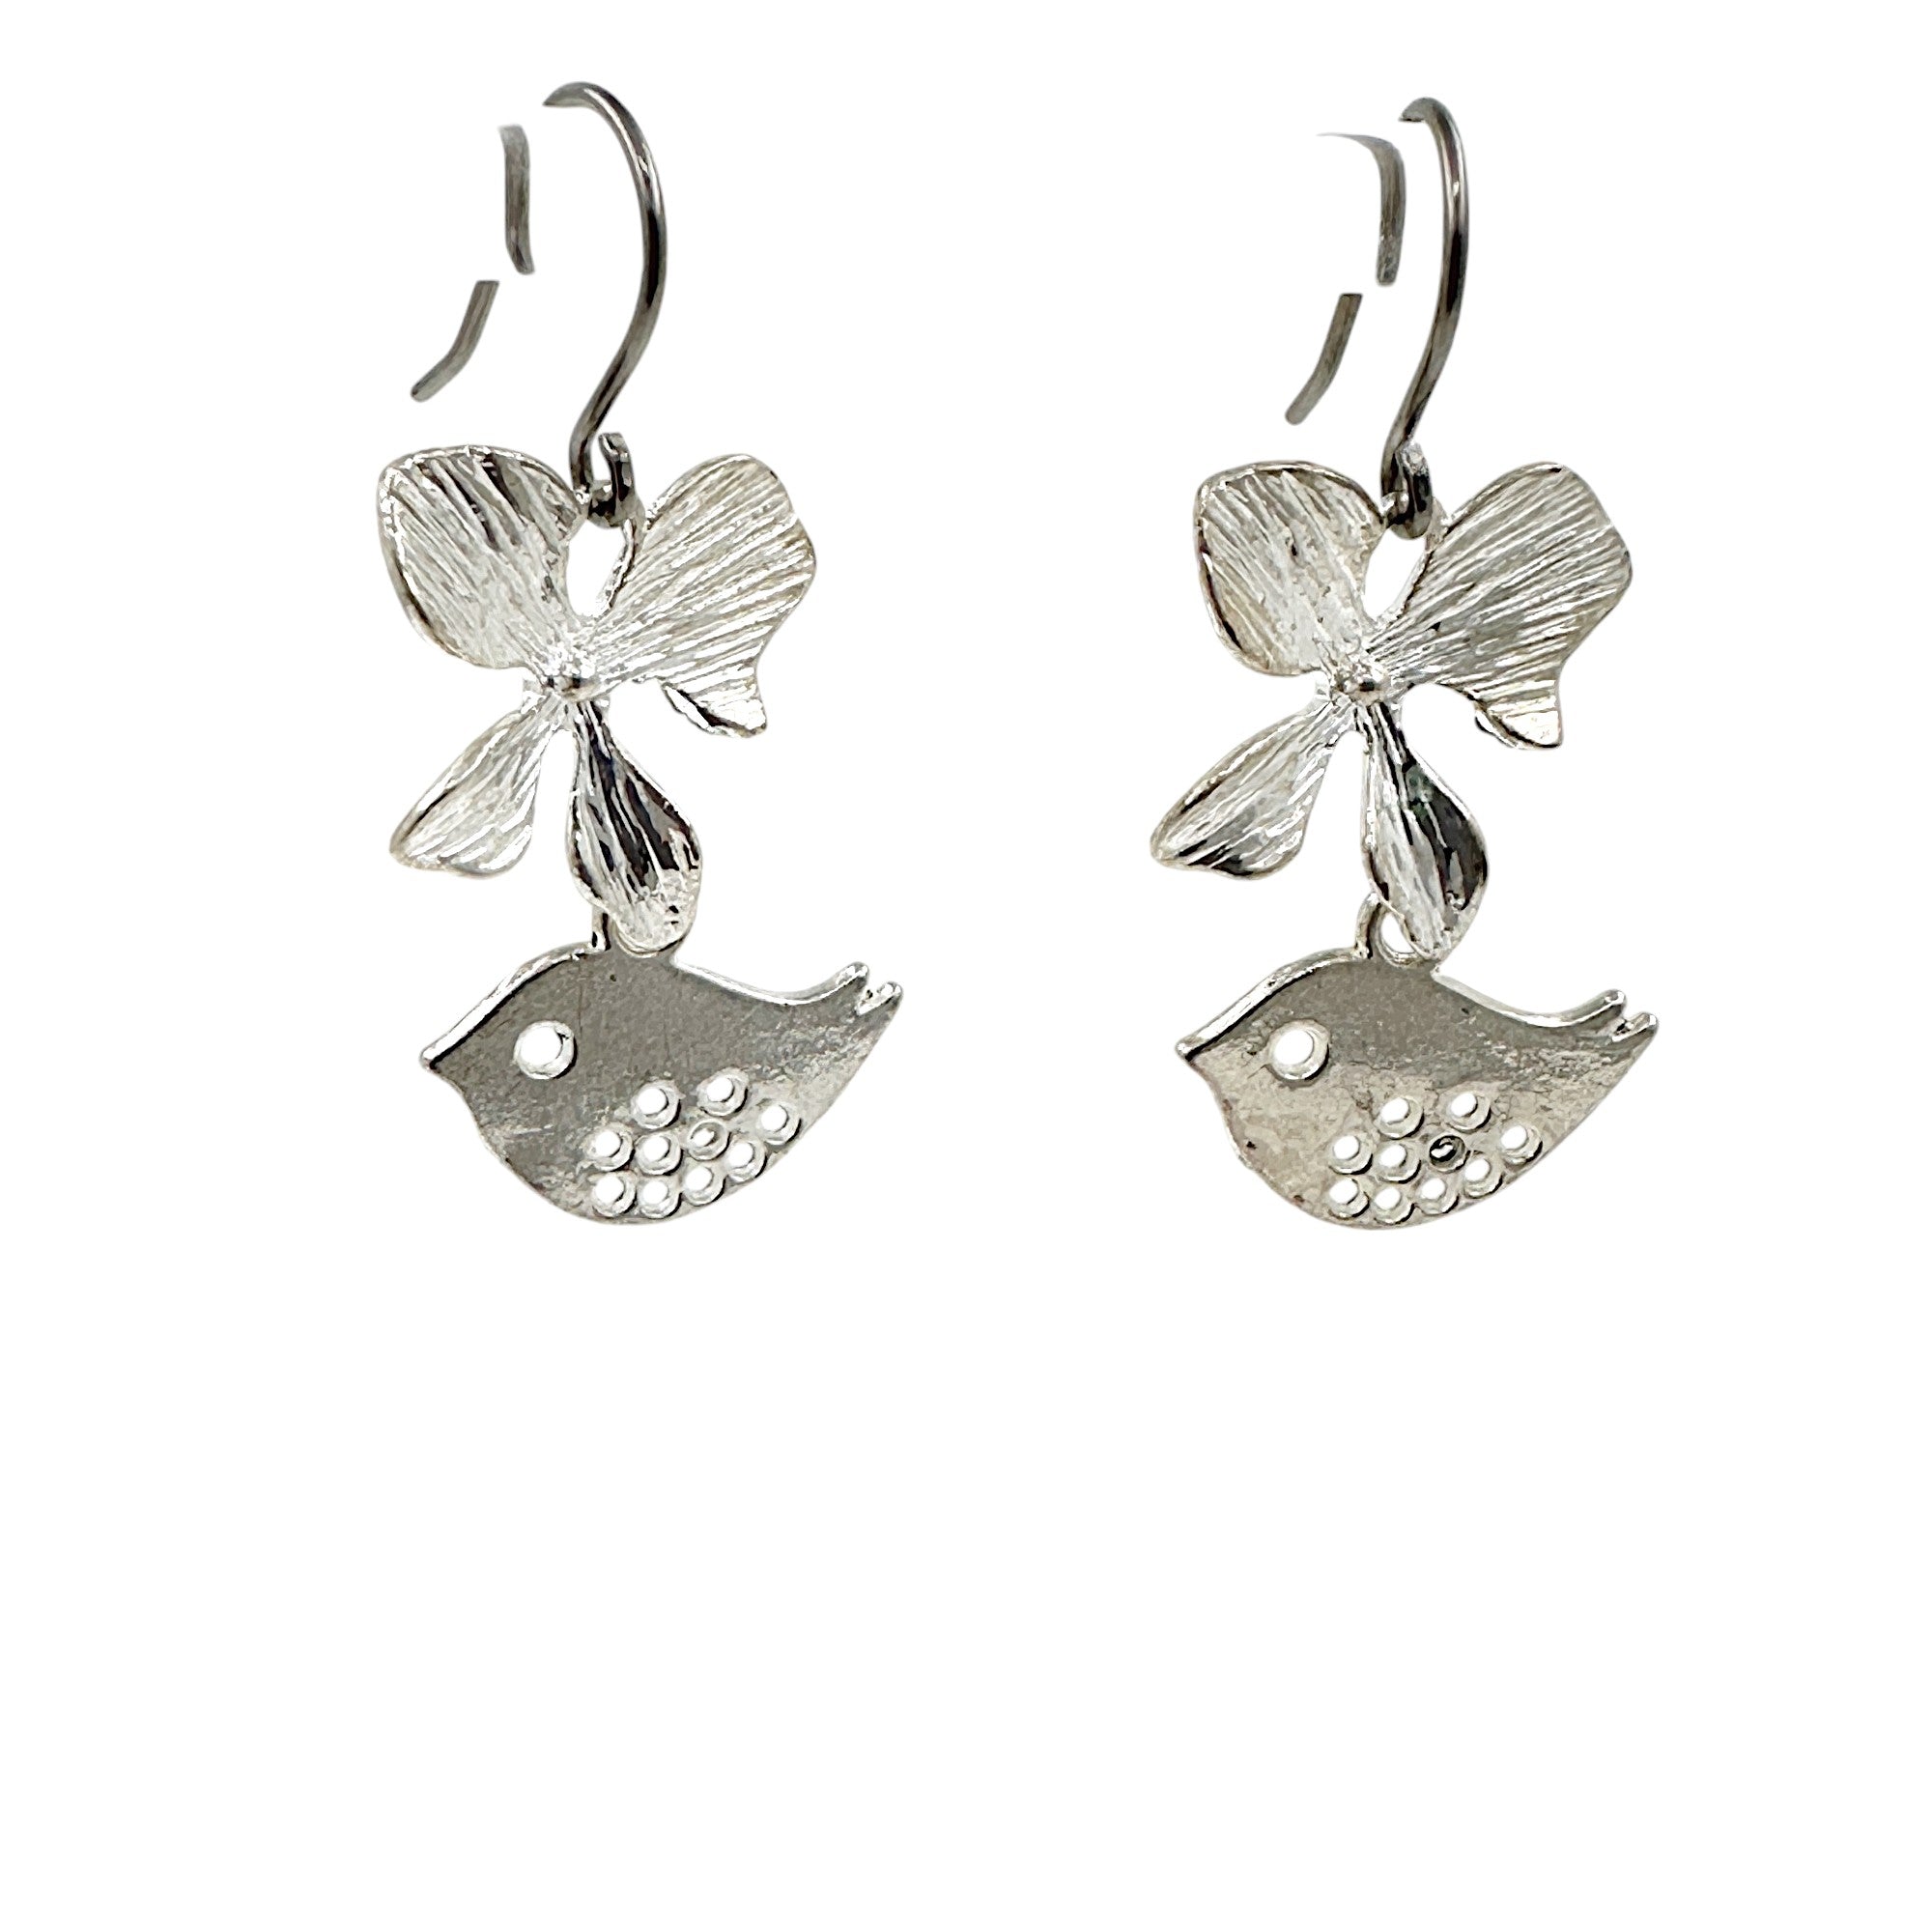 Songbird Charm earrings